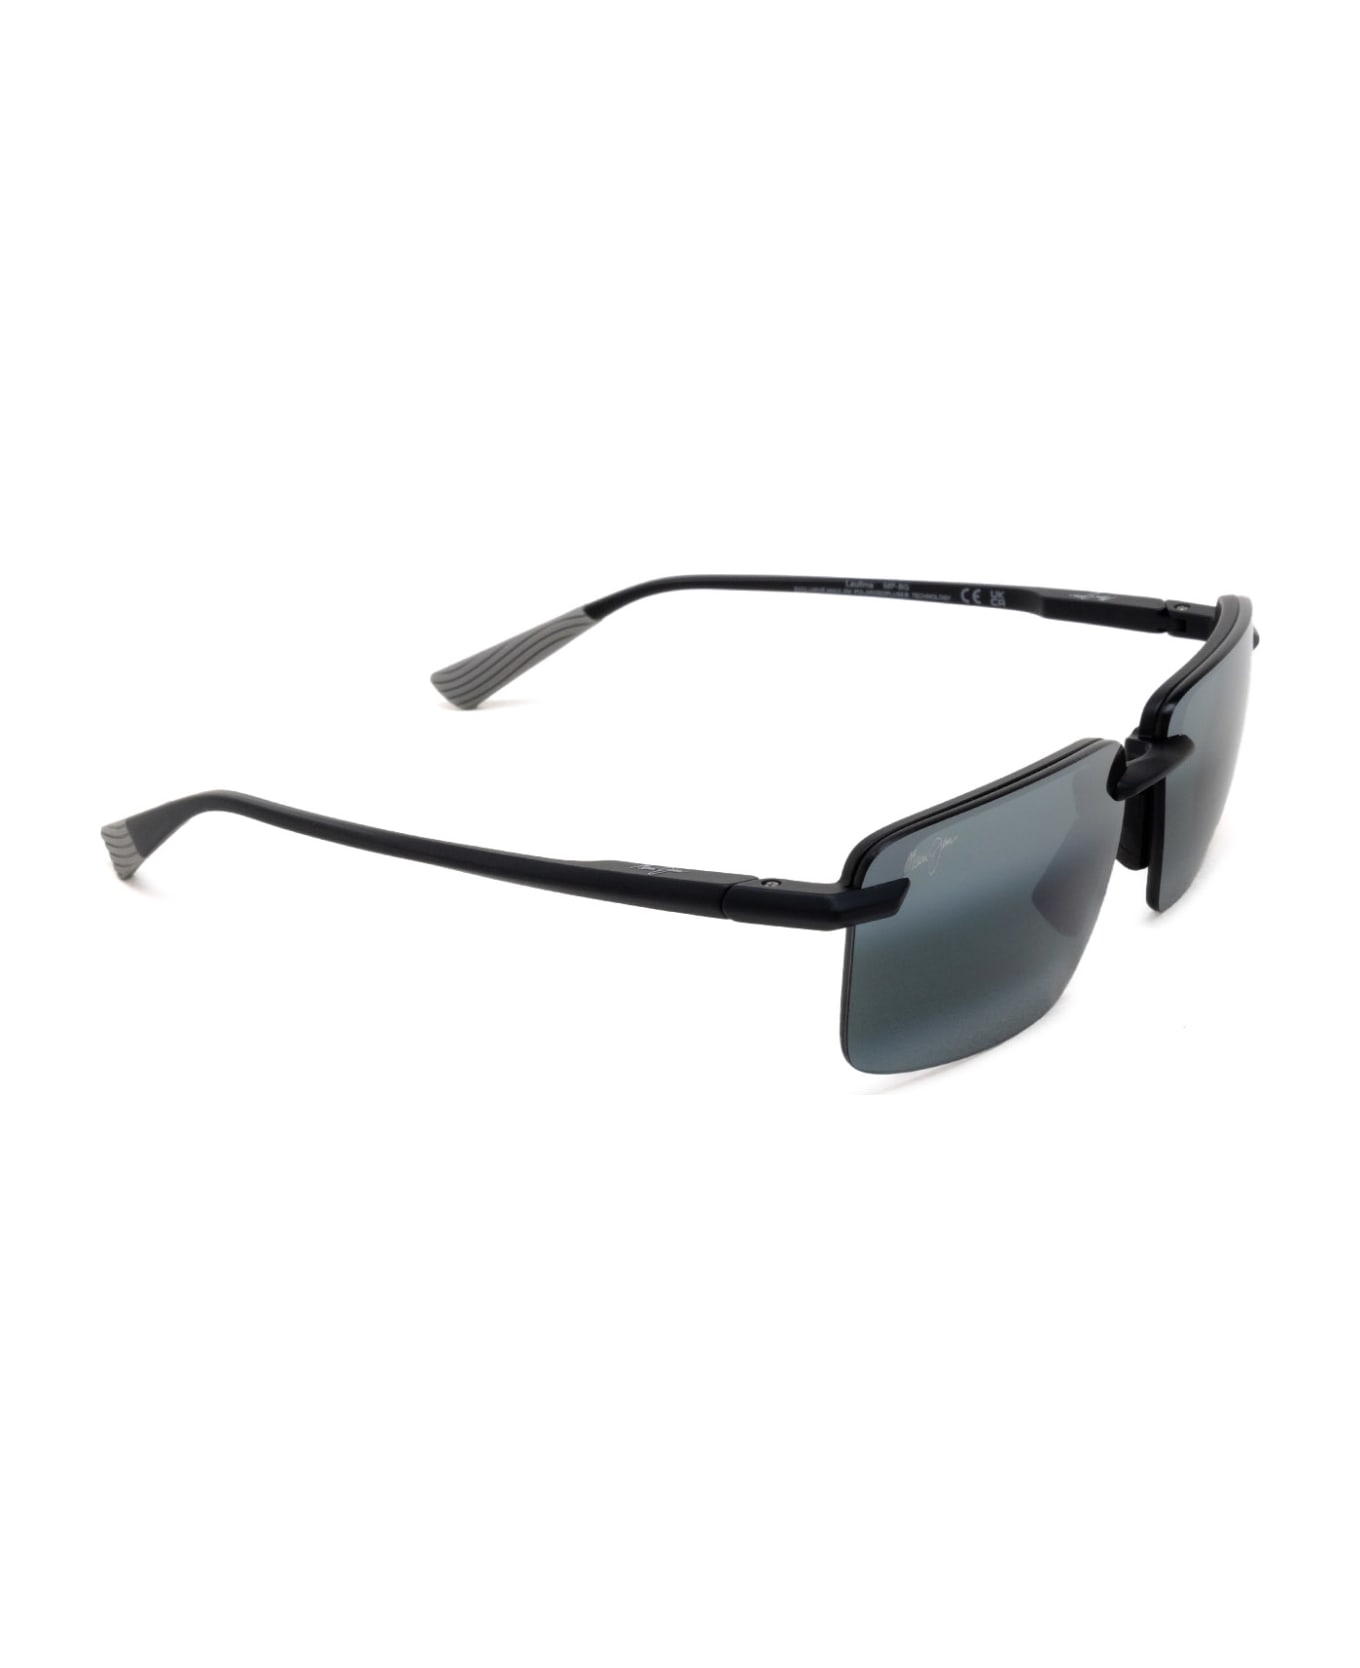 Maui Jim Mj626 Matte Black Sunglasses - Matte Black サングラス